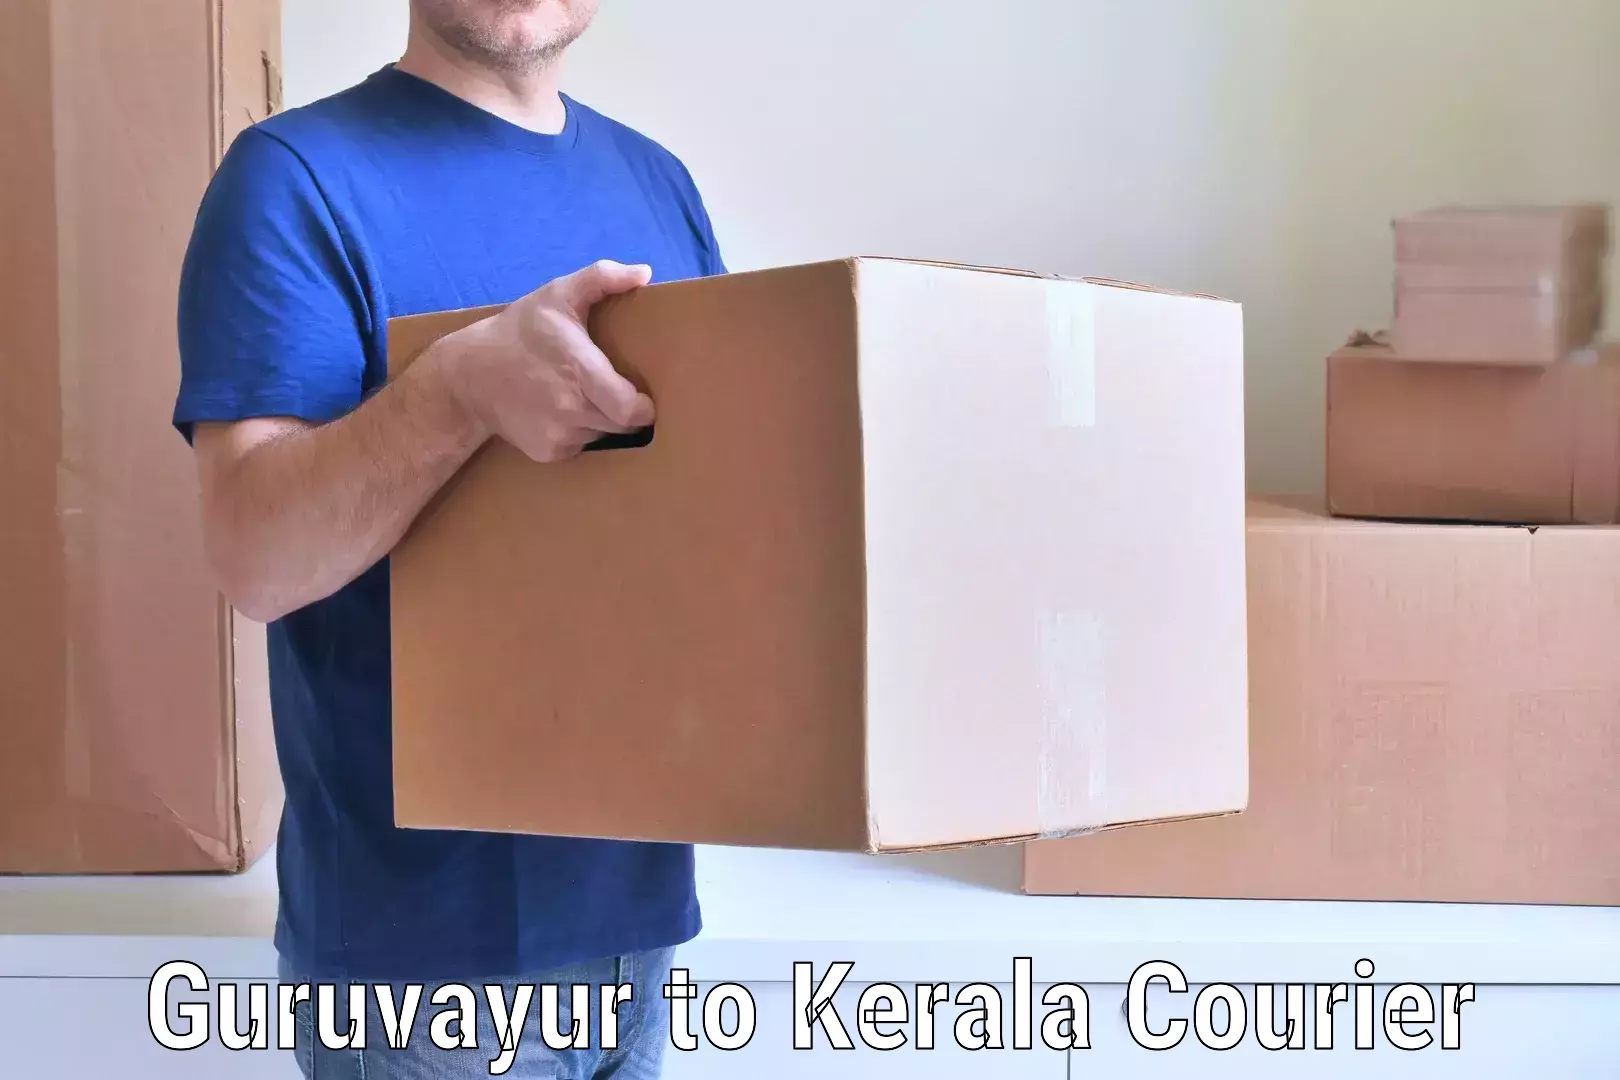 Furniture delivery service Guruvayur to Kerala